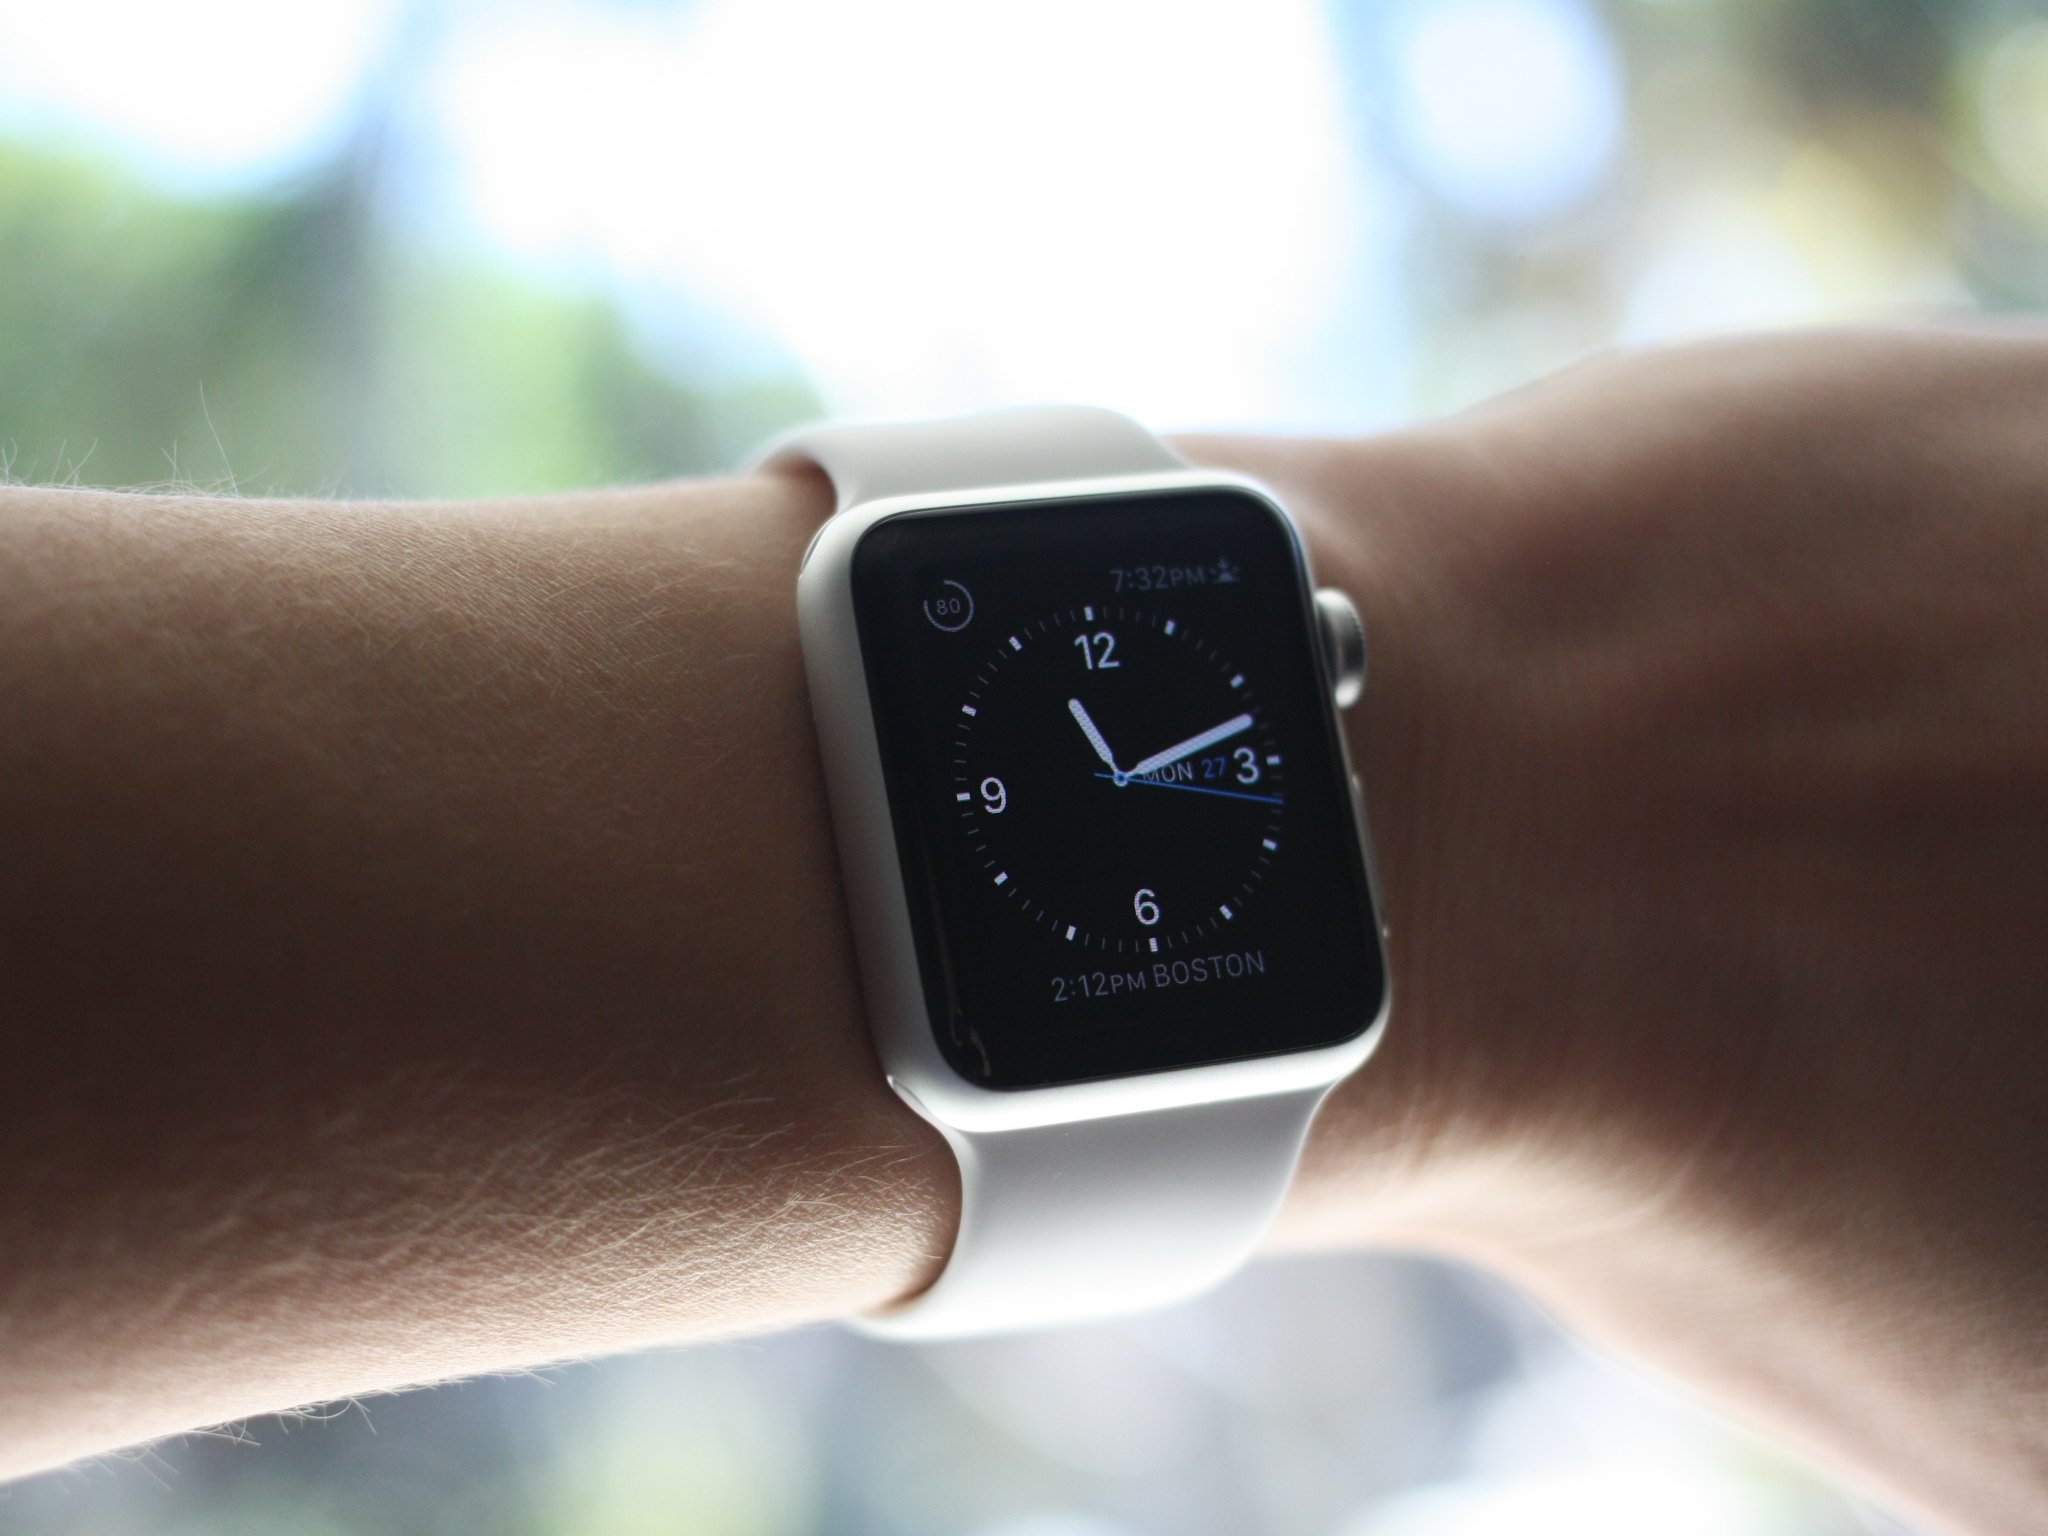 Apple Watch on wrist showing the clock.